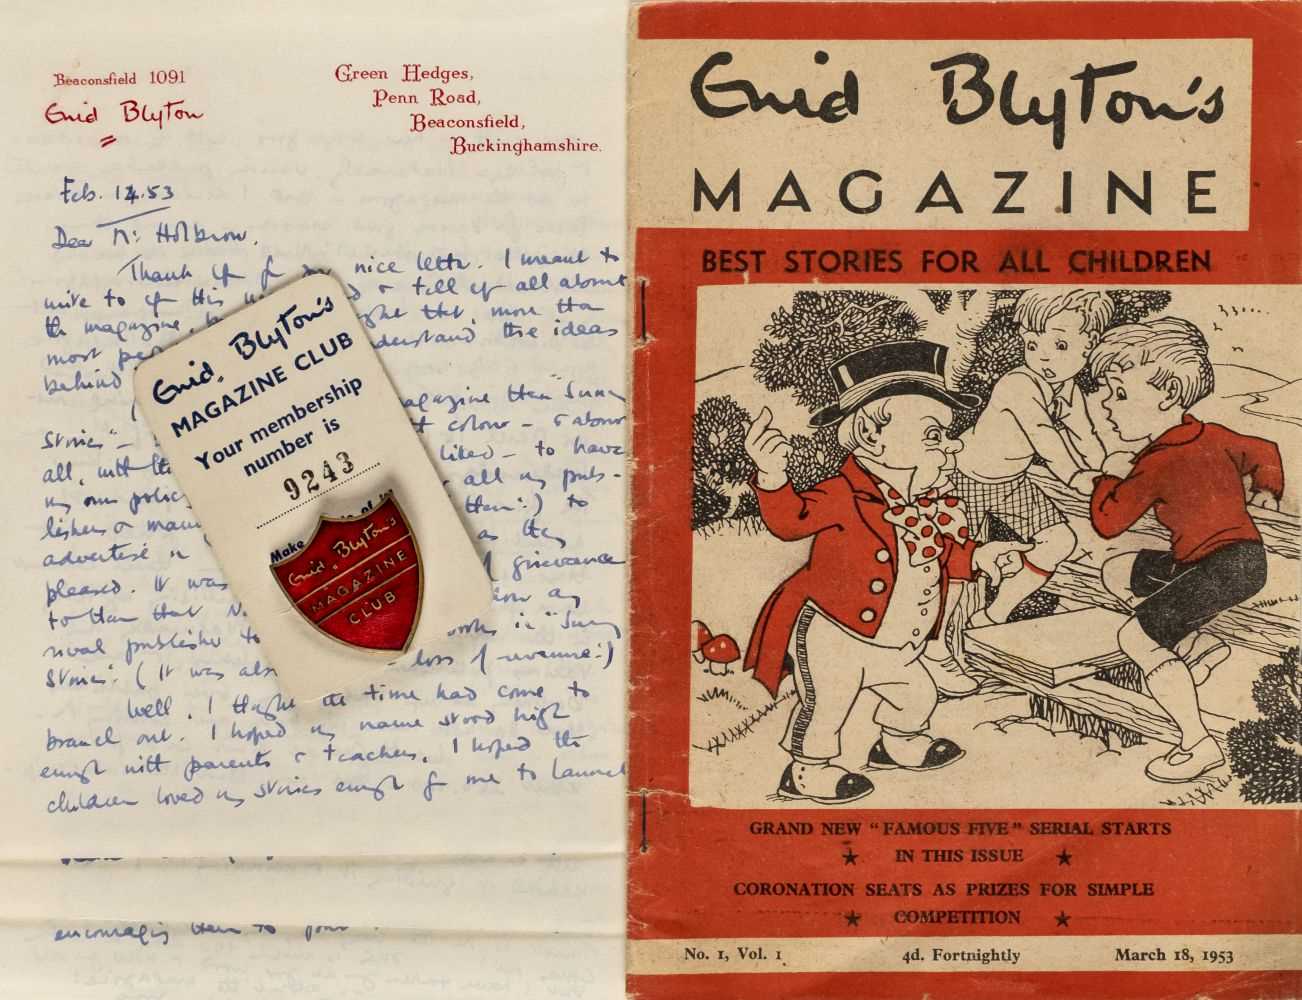 Lot 586 - Blyton (Enid, 1897-1968). Autograph letter signed, 14 February 1953